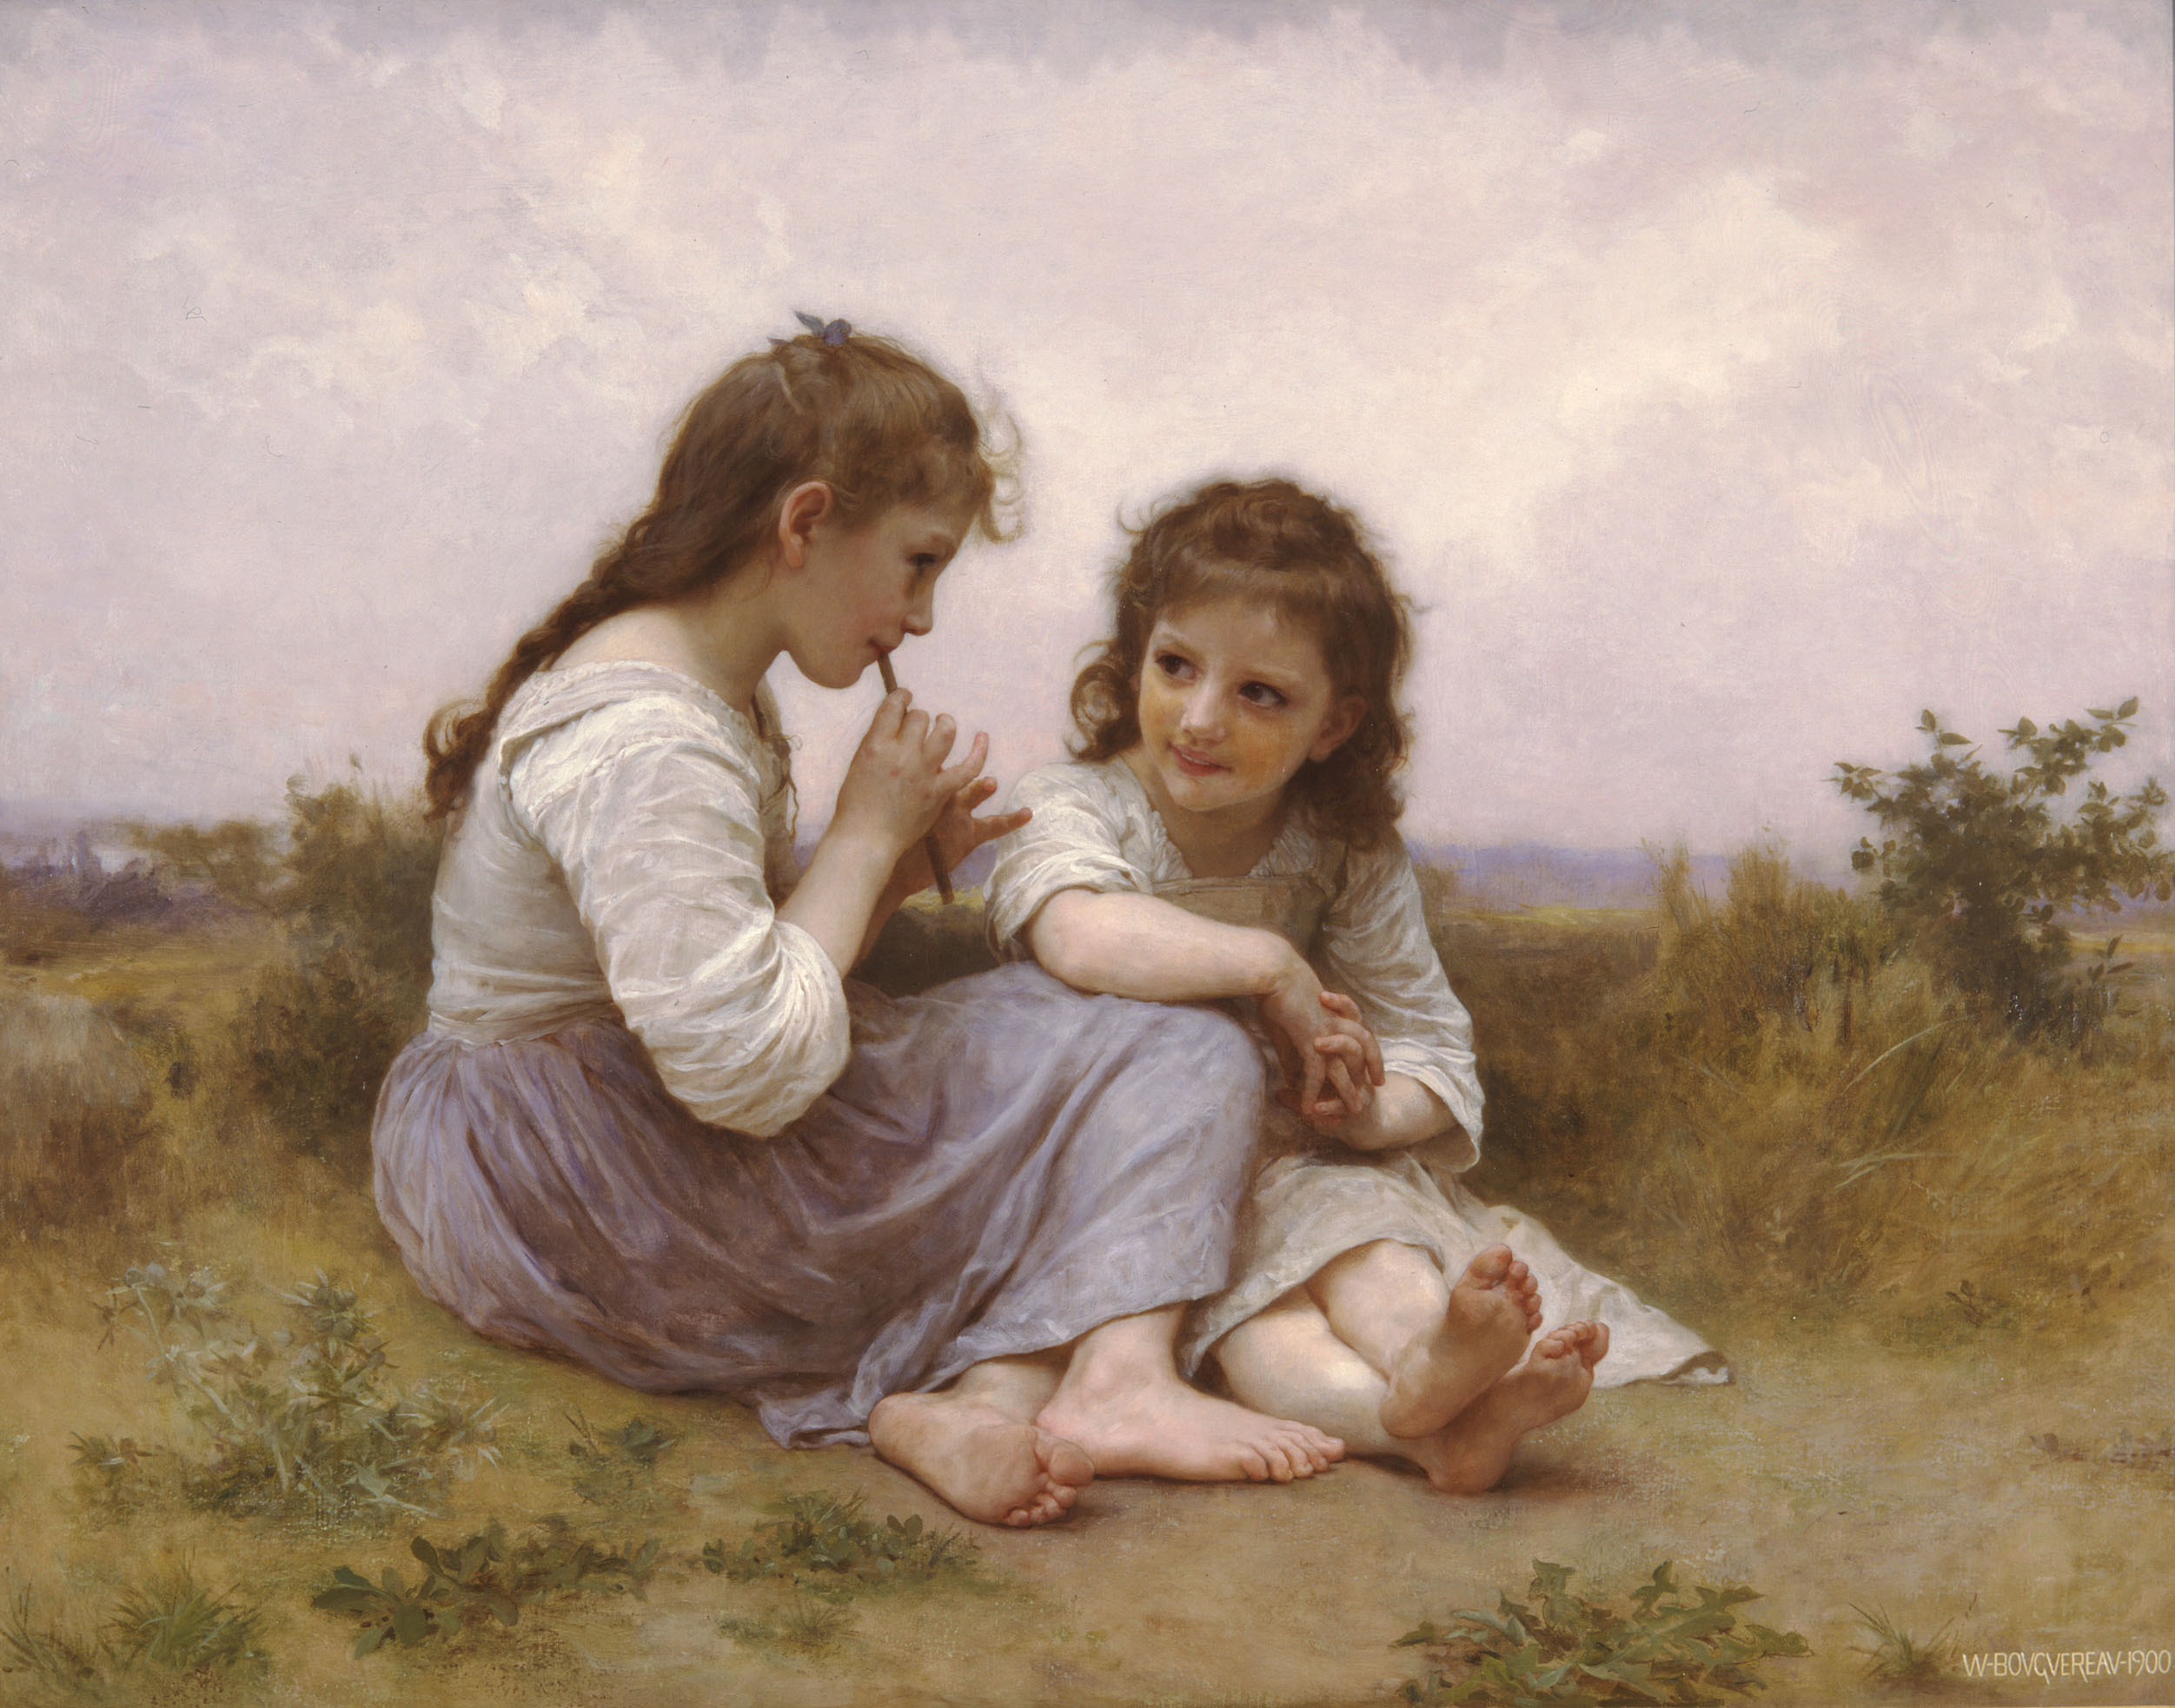 File:William-Adolphe Bouguereau (1825-1905) - A Childhood Idyll